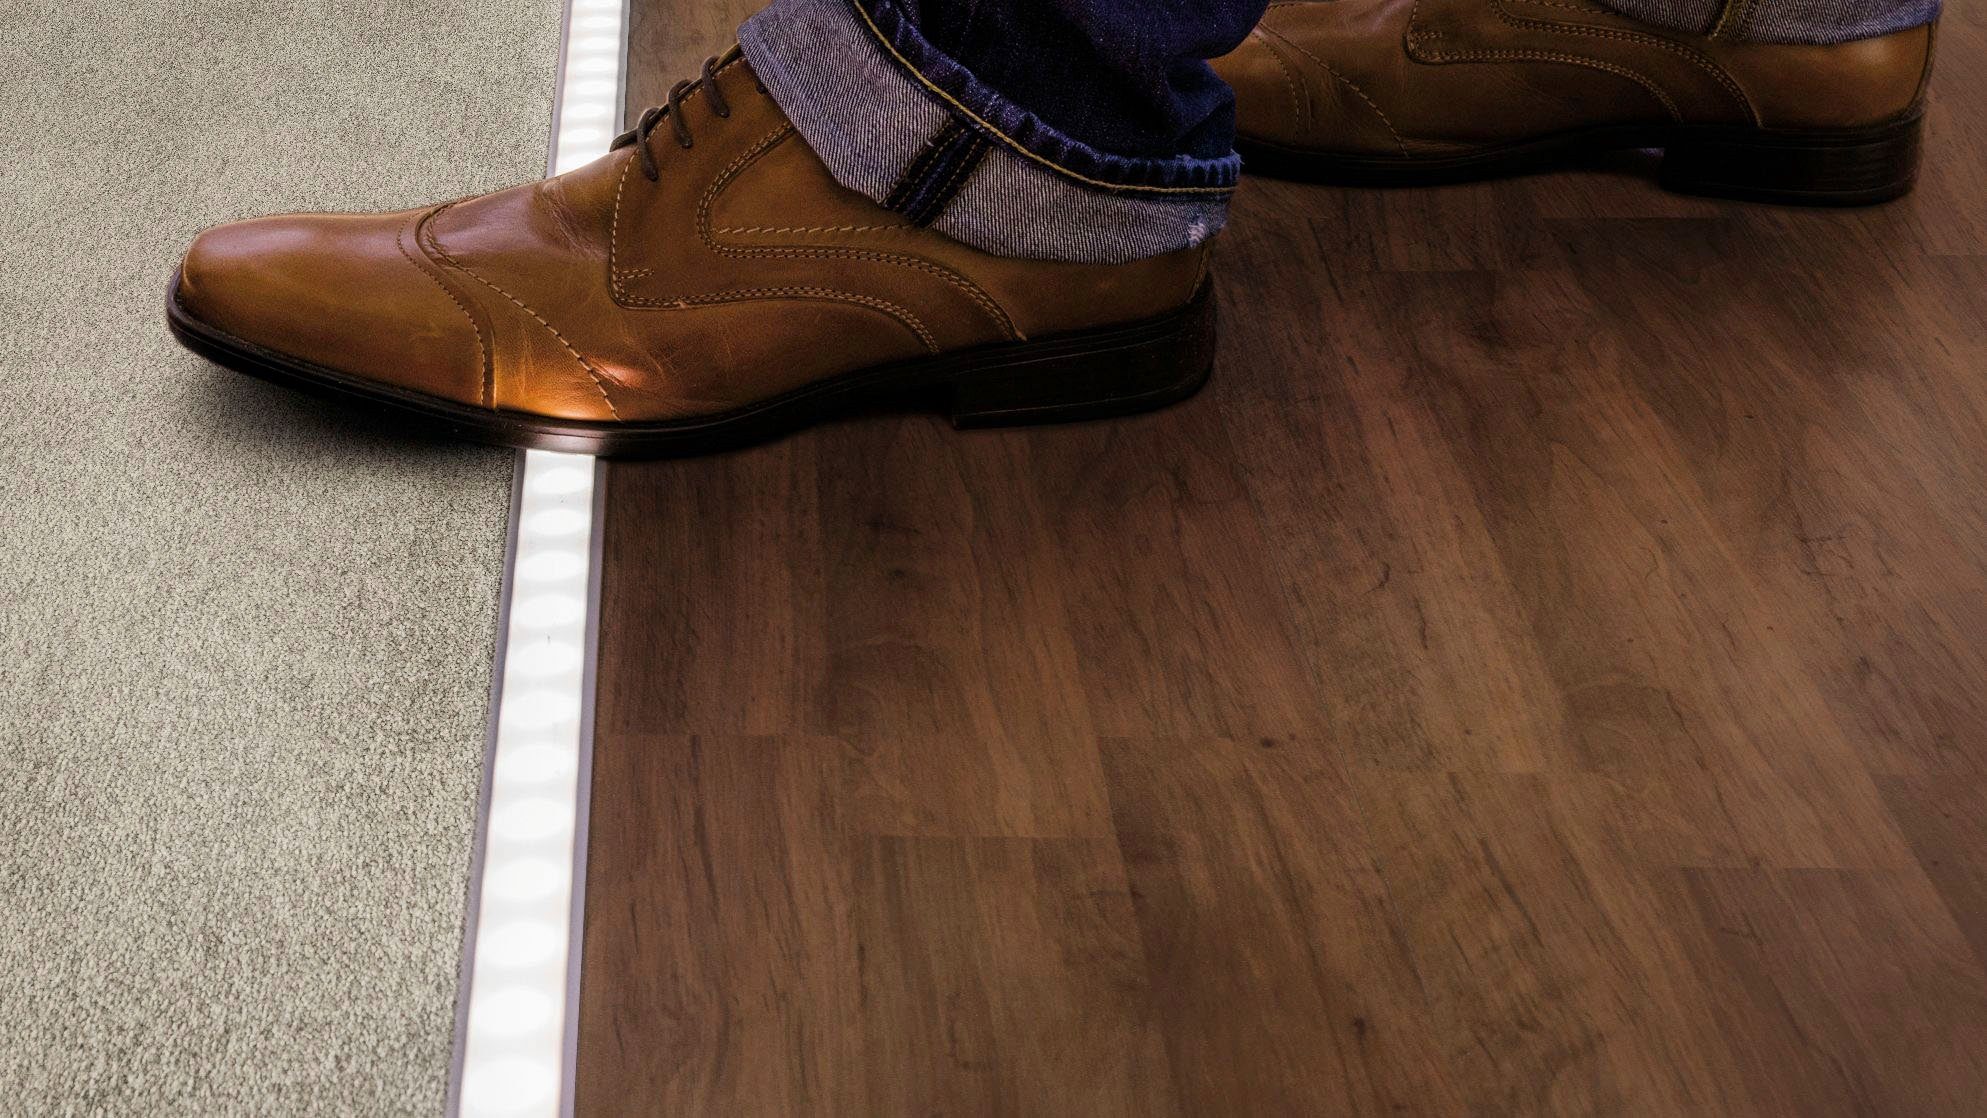 Paulmann LED-Streifen Floor Profil Alu Satin,Alu/Kunststoff 100cm Diffusor Alu eloxiert, mit